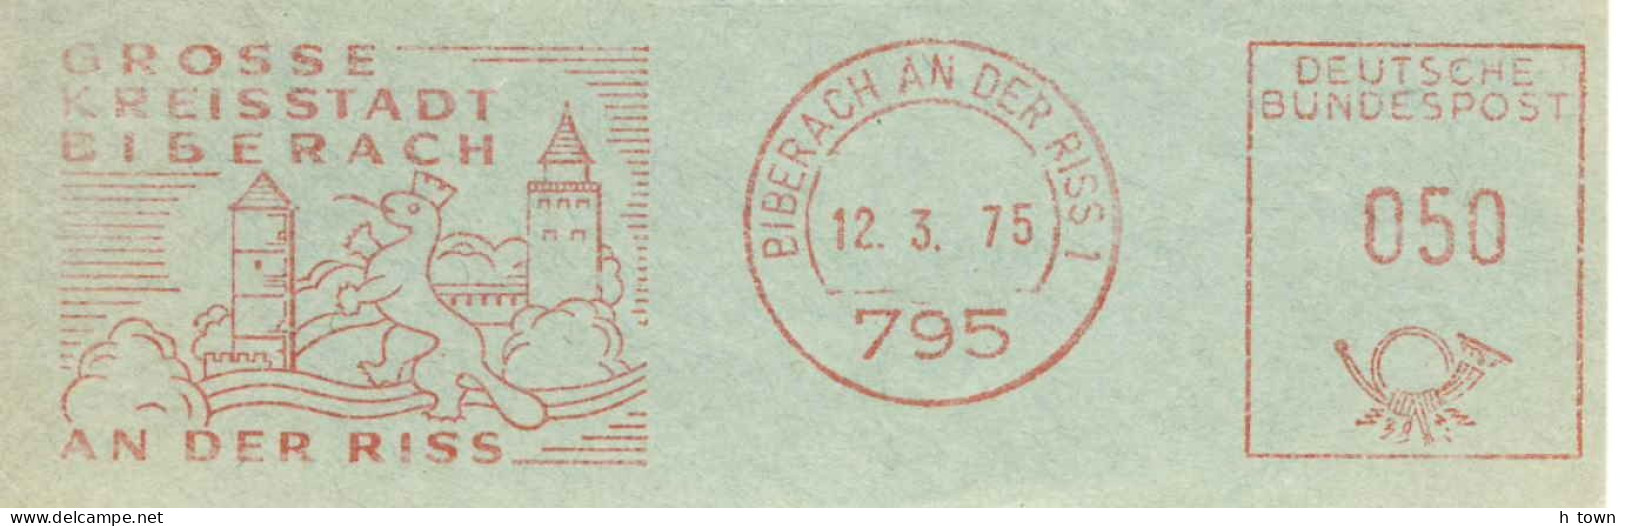 954  Castor: Ema D'Allemagne, 1975 - Beaver Meter Stamp From Biberach, Germany - Rongeurs